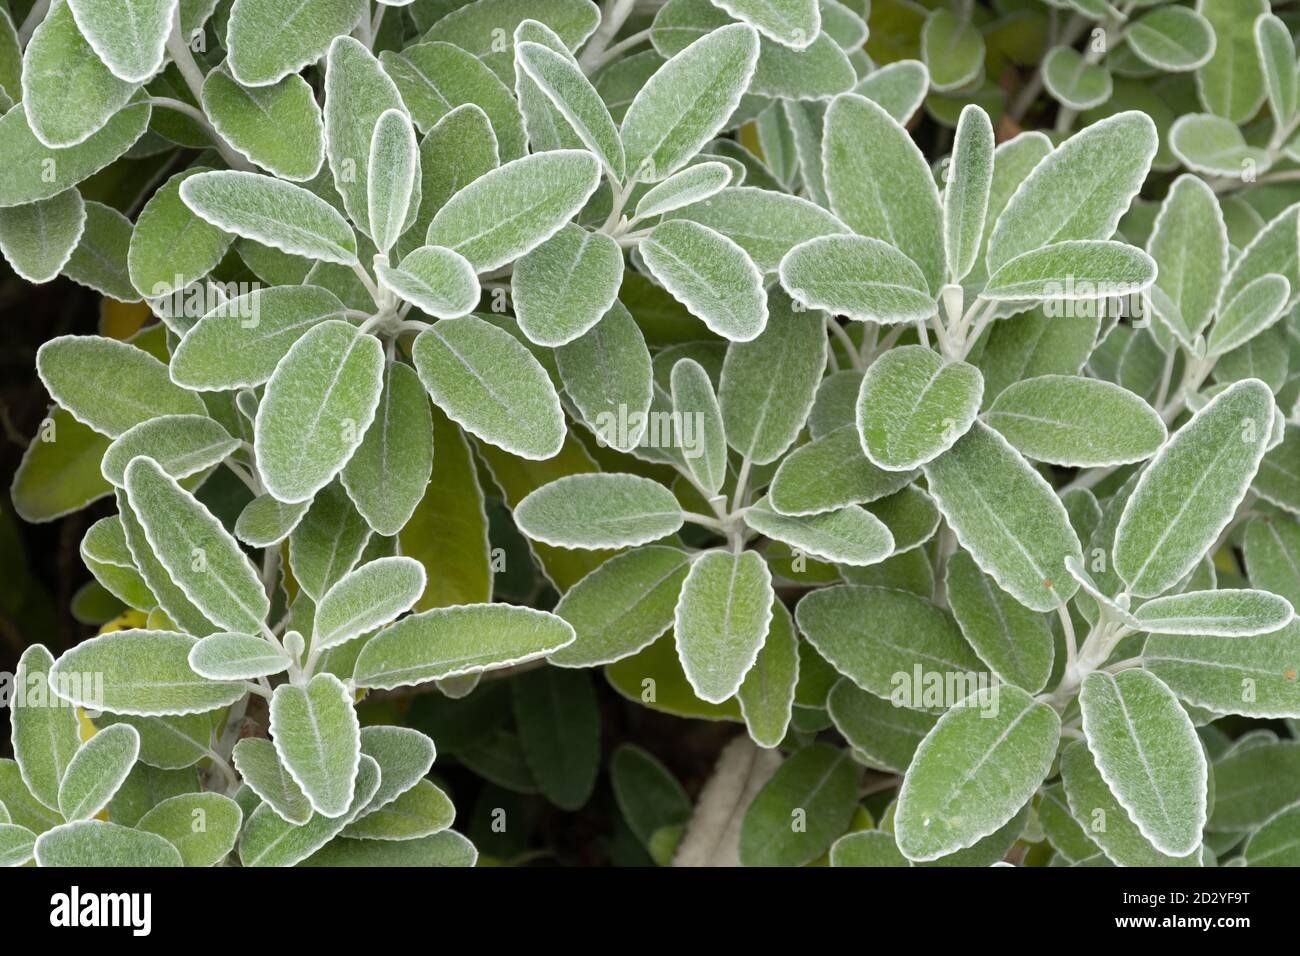 Brachyglottis greyi, also called Senecio greyi, with the common name daisy bush. A shrub with grey down-covered foliage in October or autumn. Stock Photo